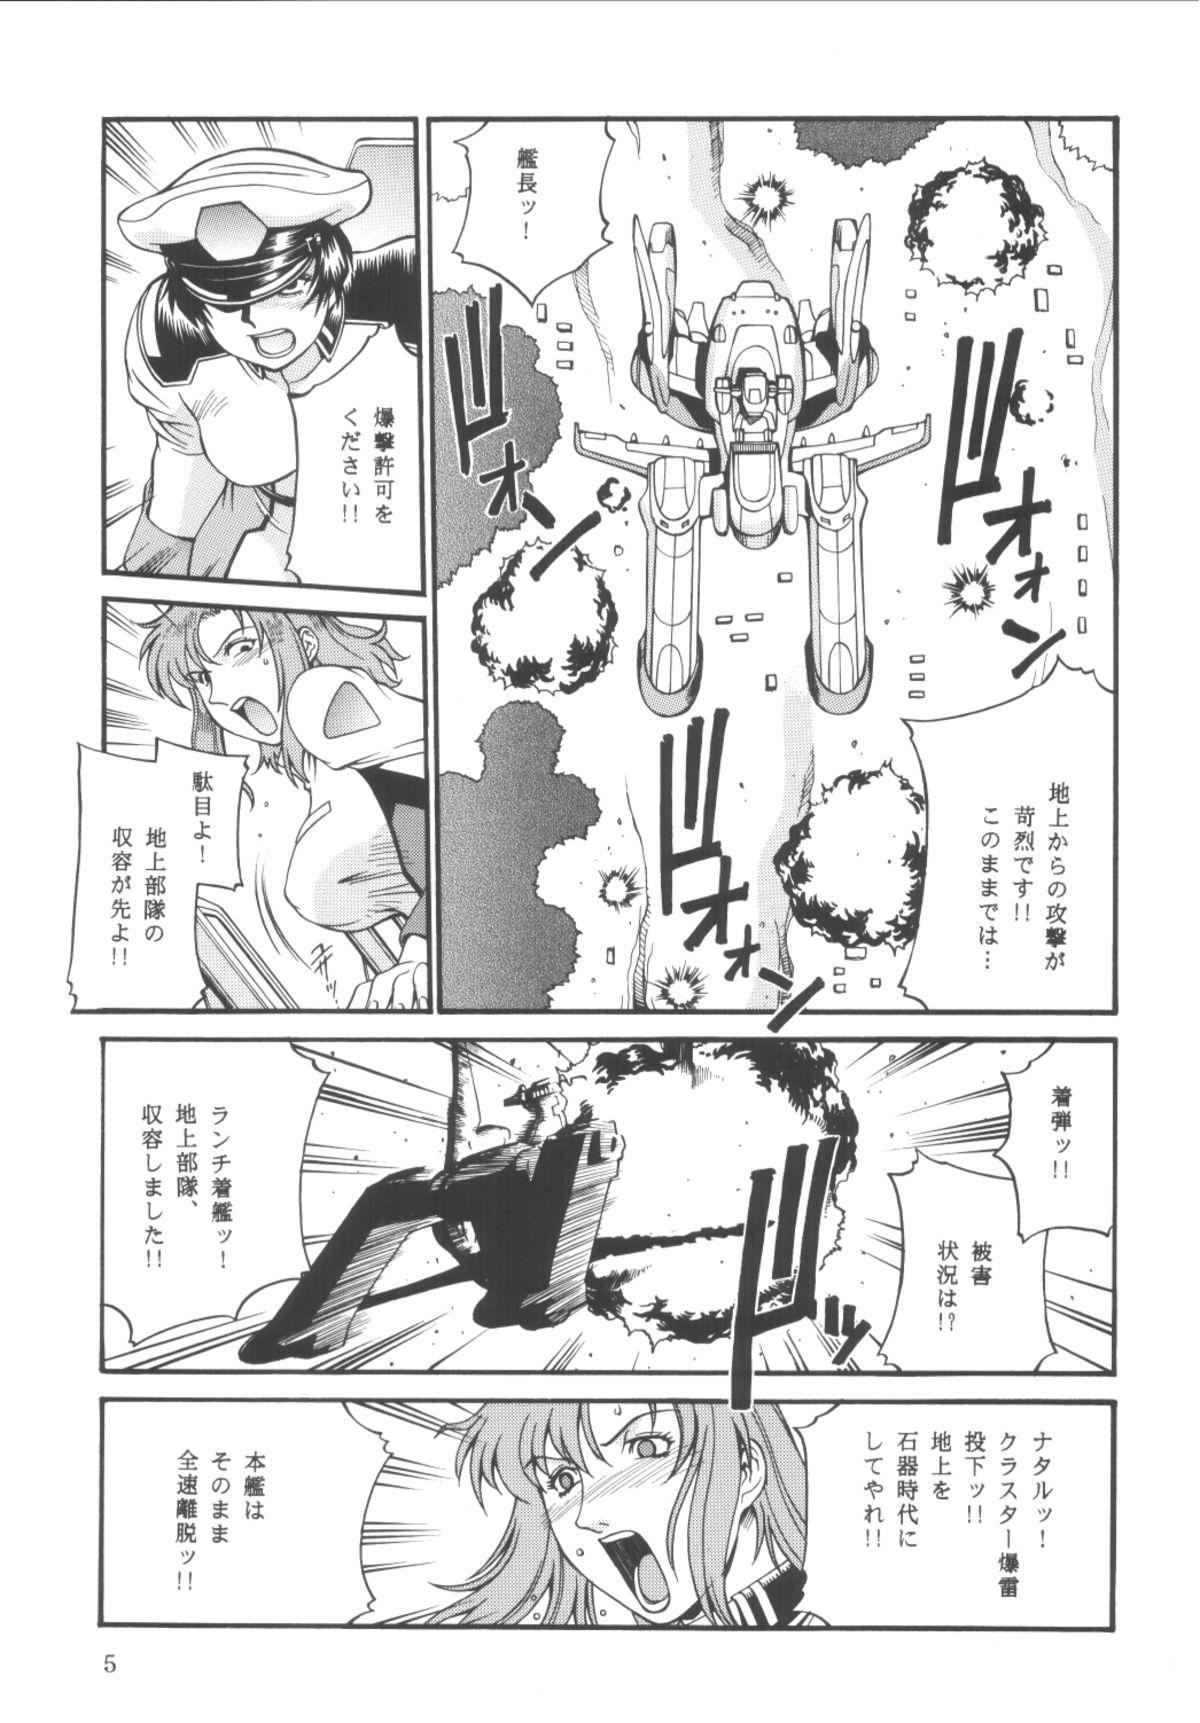 Baile SEED OUT - Gundam seed Teamskeet - Page 5